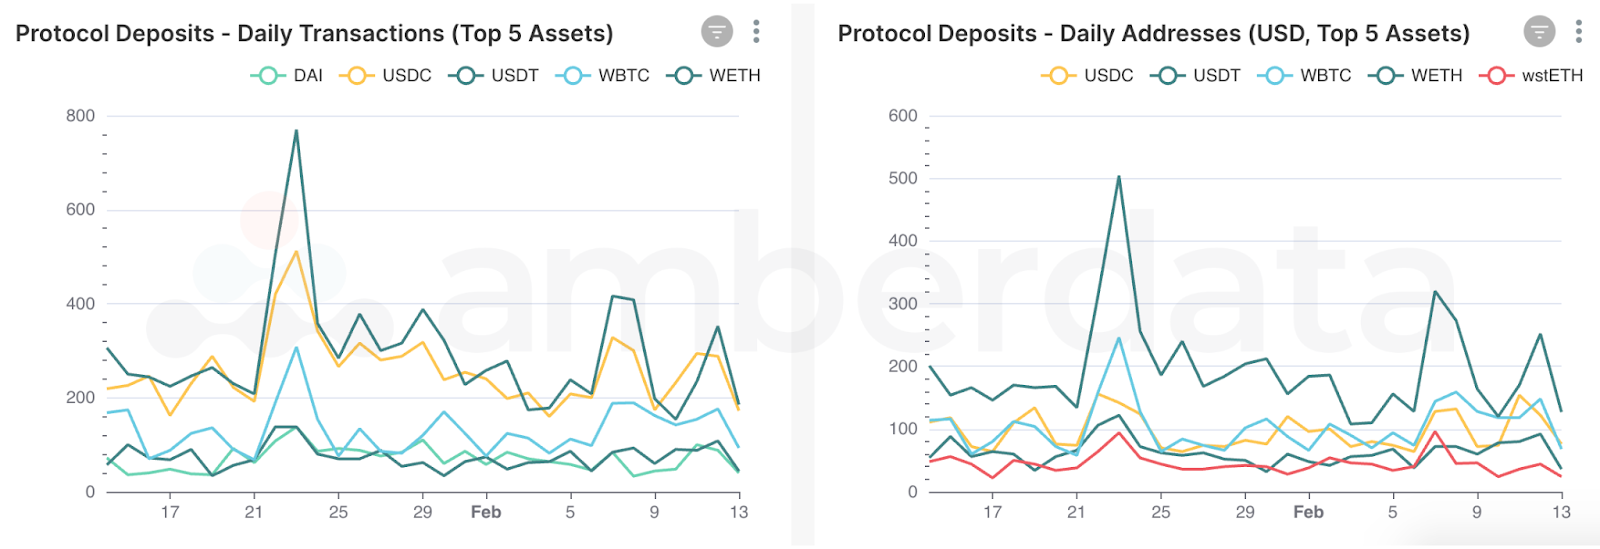 Amberdata API DeFi Lending deposit count and address depositor counts by token. DAI USDC USDT WBTC WETH